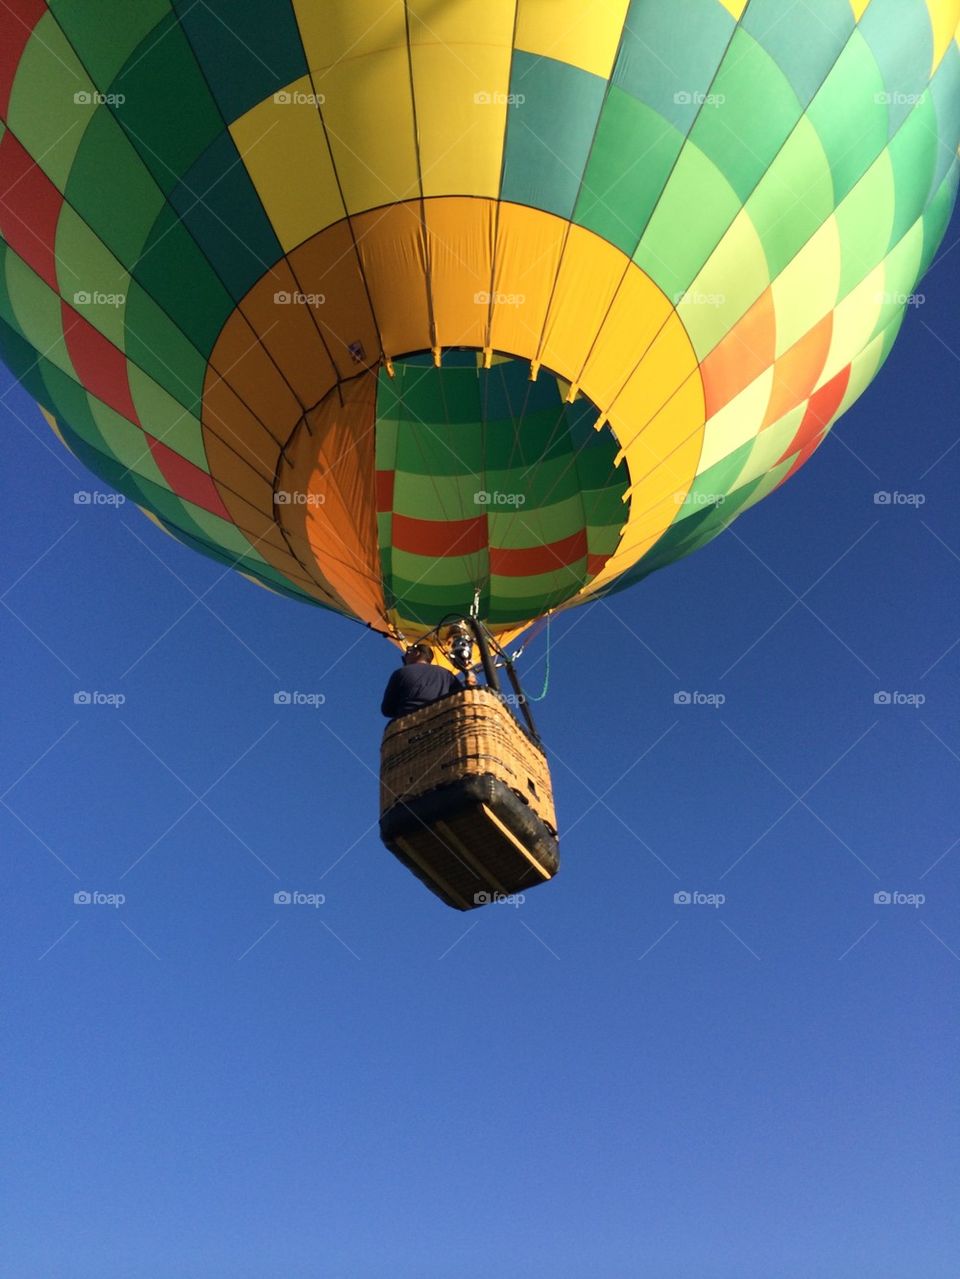 Balloon ride